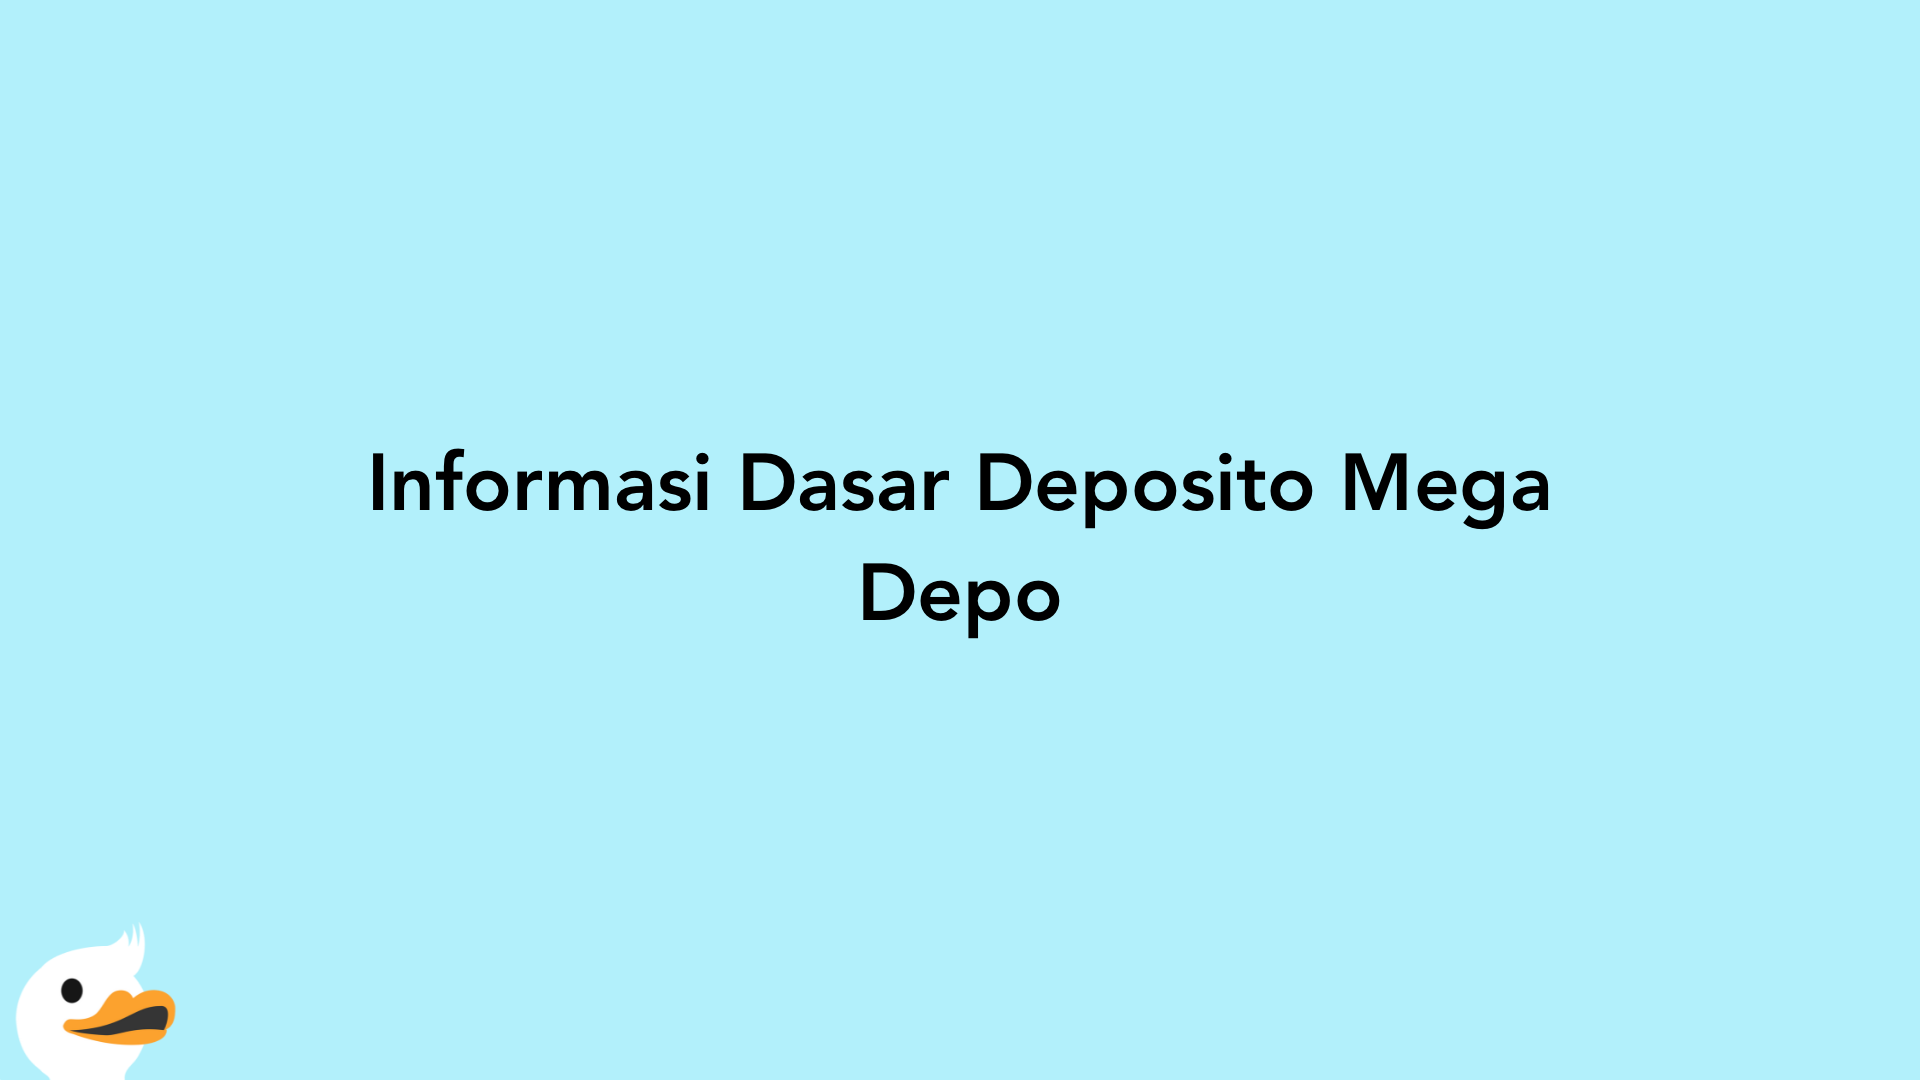 Informasi Dasar Deposito Mega Depo